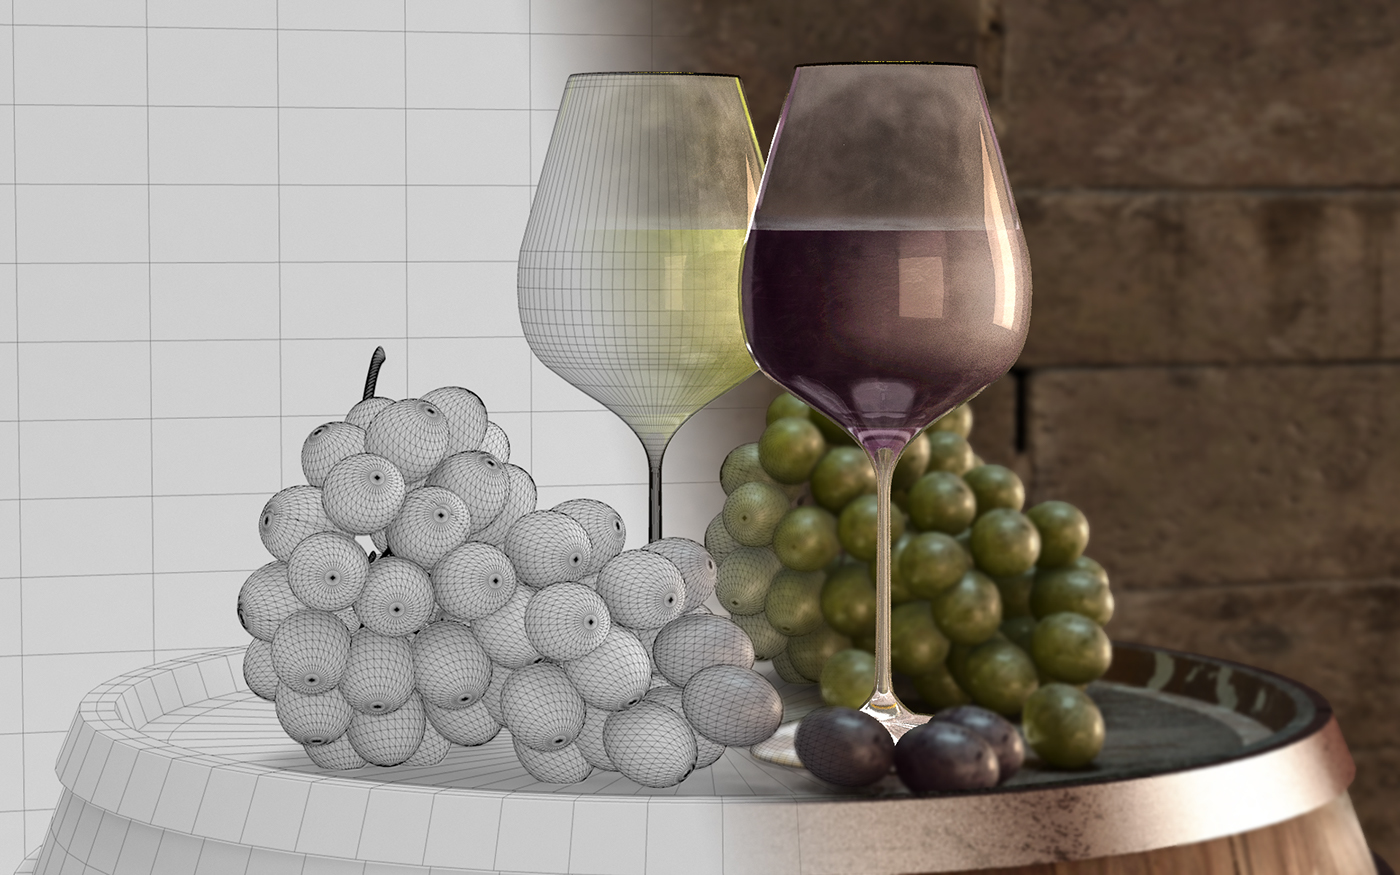 Vinos uvas bodegon vray substance cinema 4d modelado viñedo